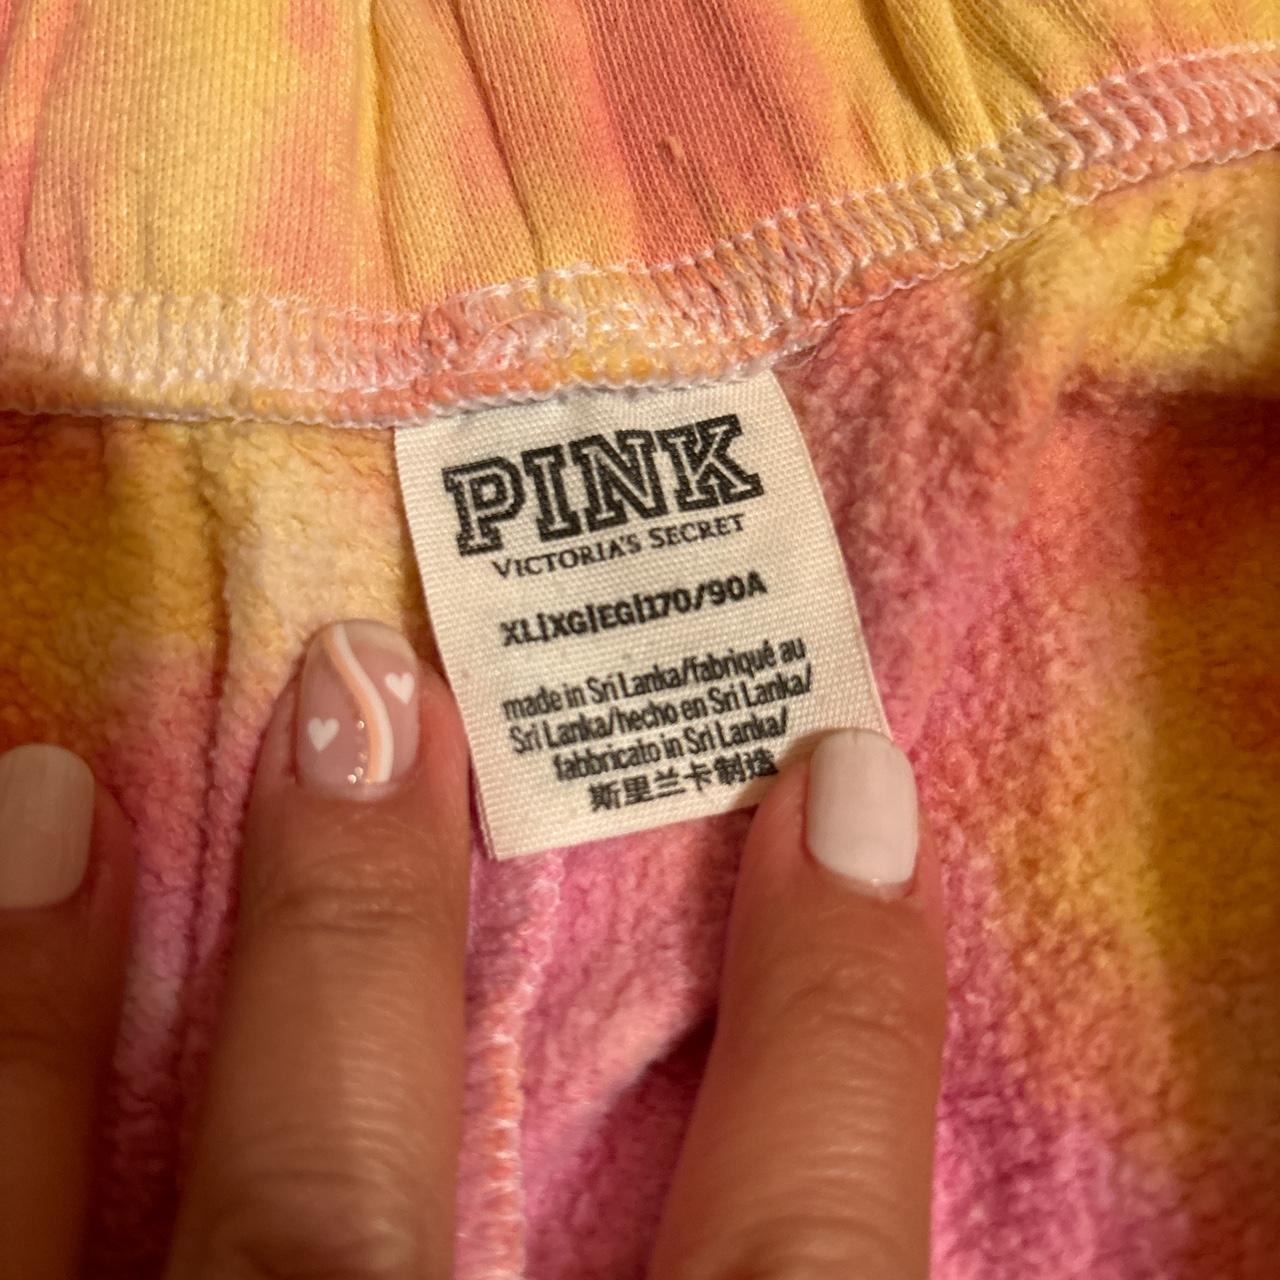 Victoria's Secret PINK tie dye orange and pink - Depop